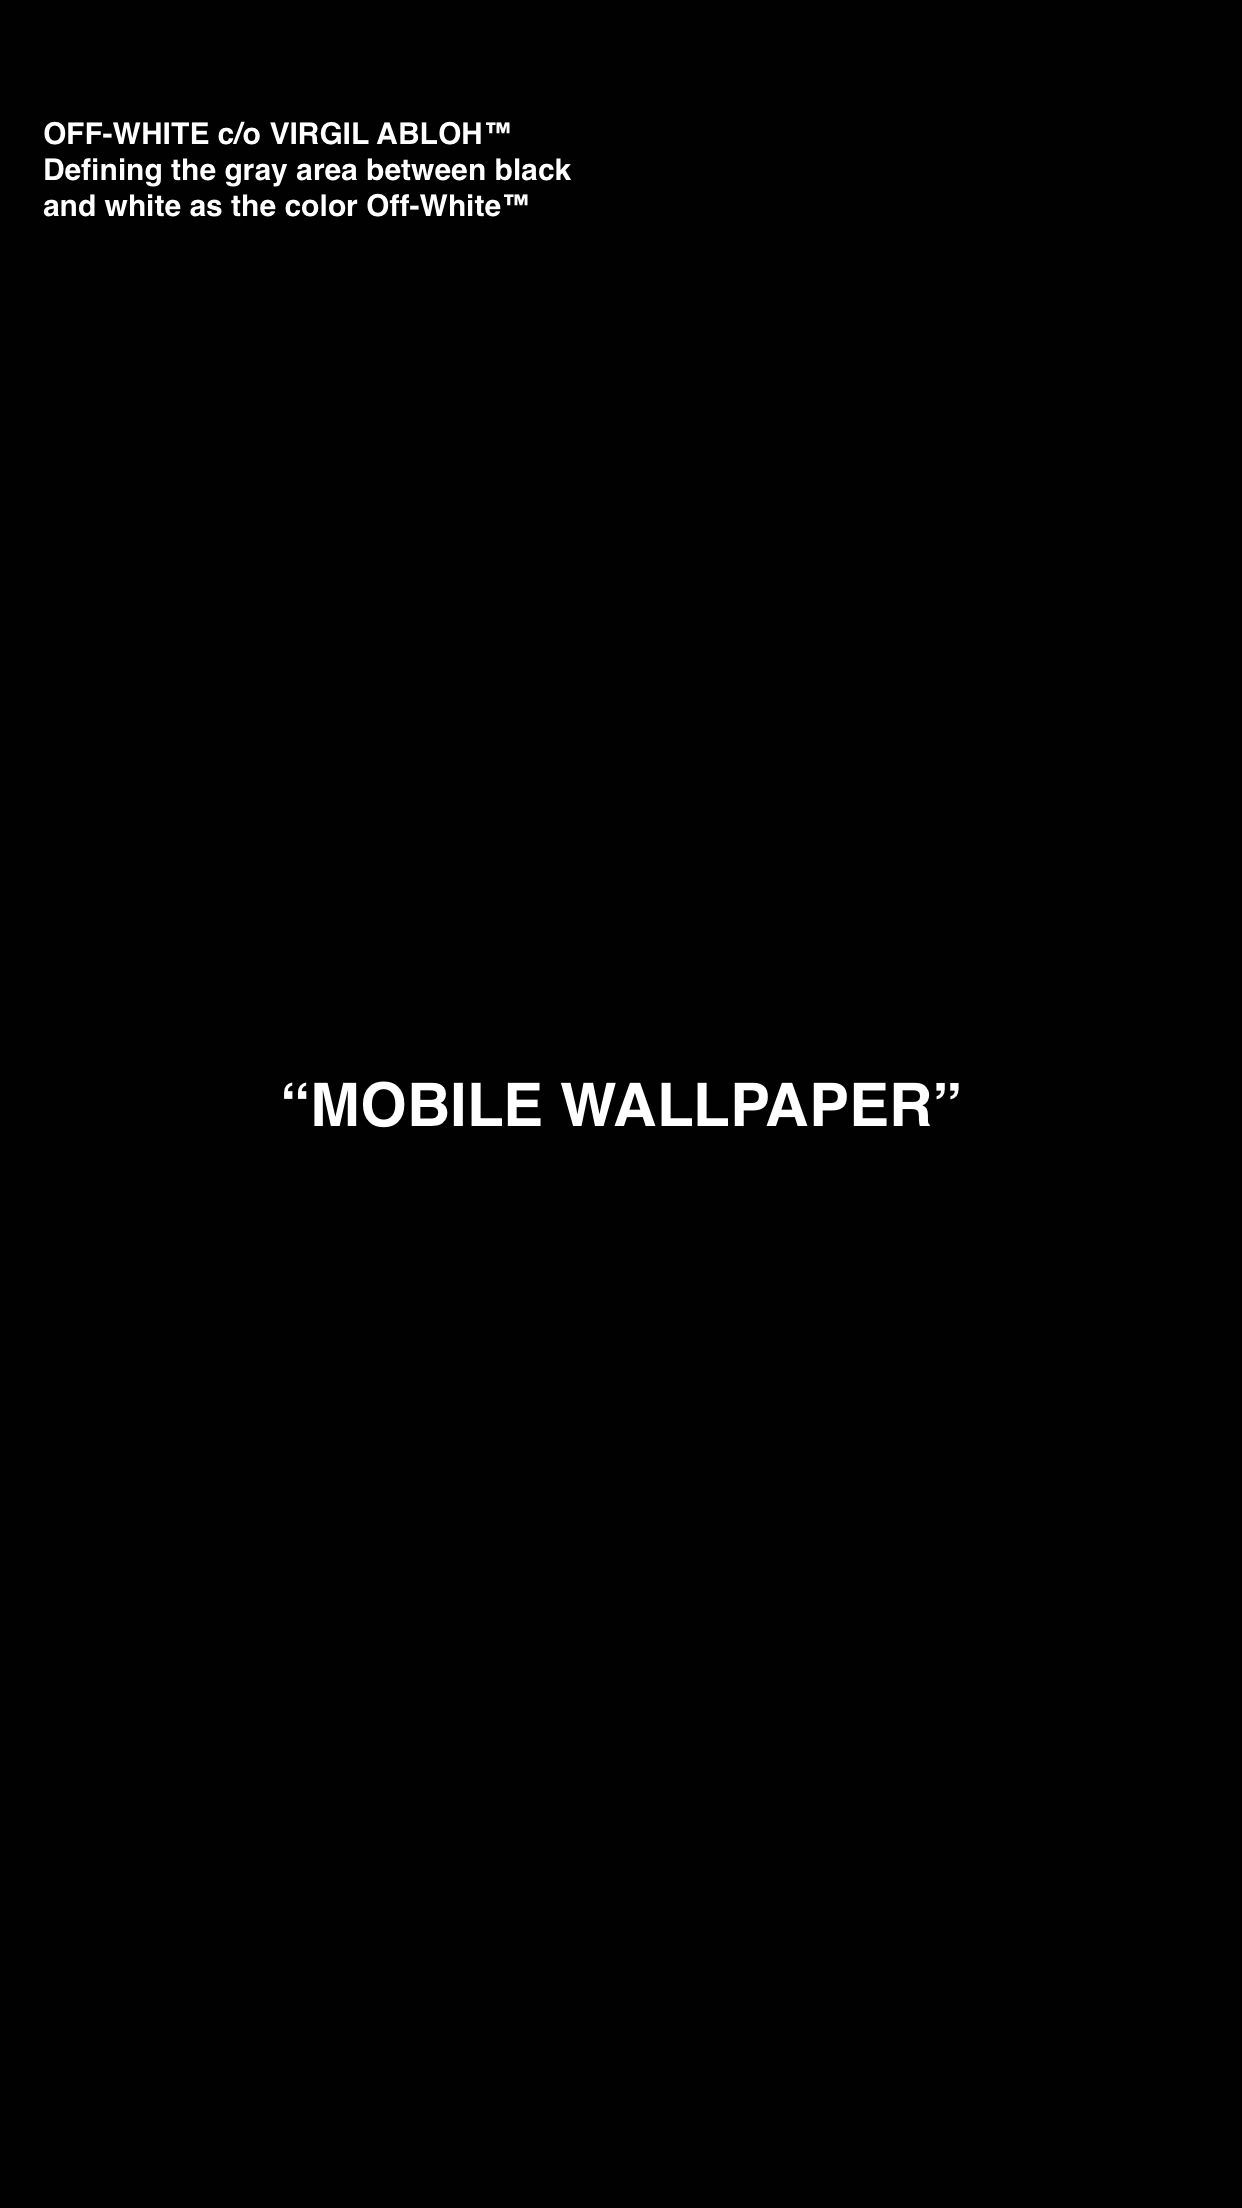 Off-White Wallpapers - iPhone + Desktop - Álbum en Imgur